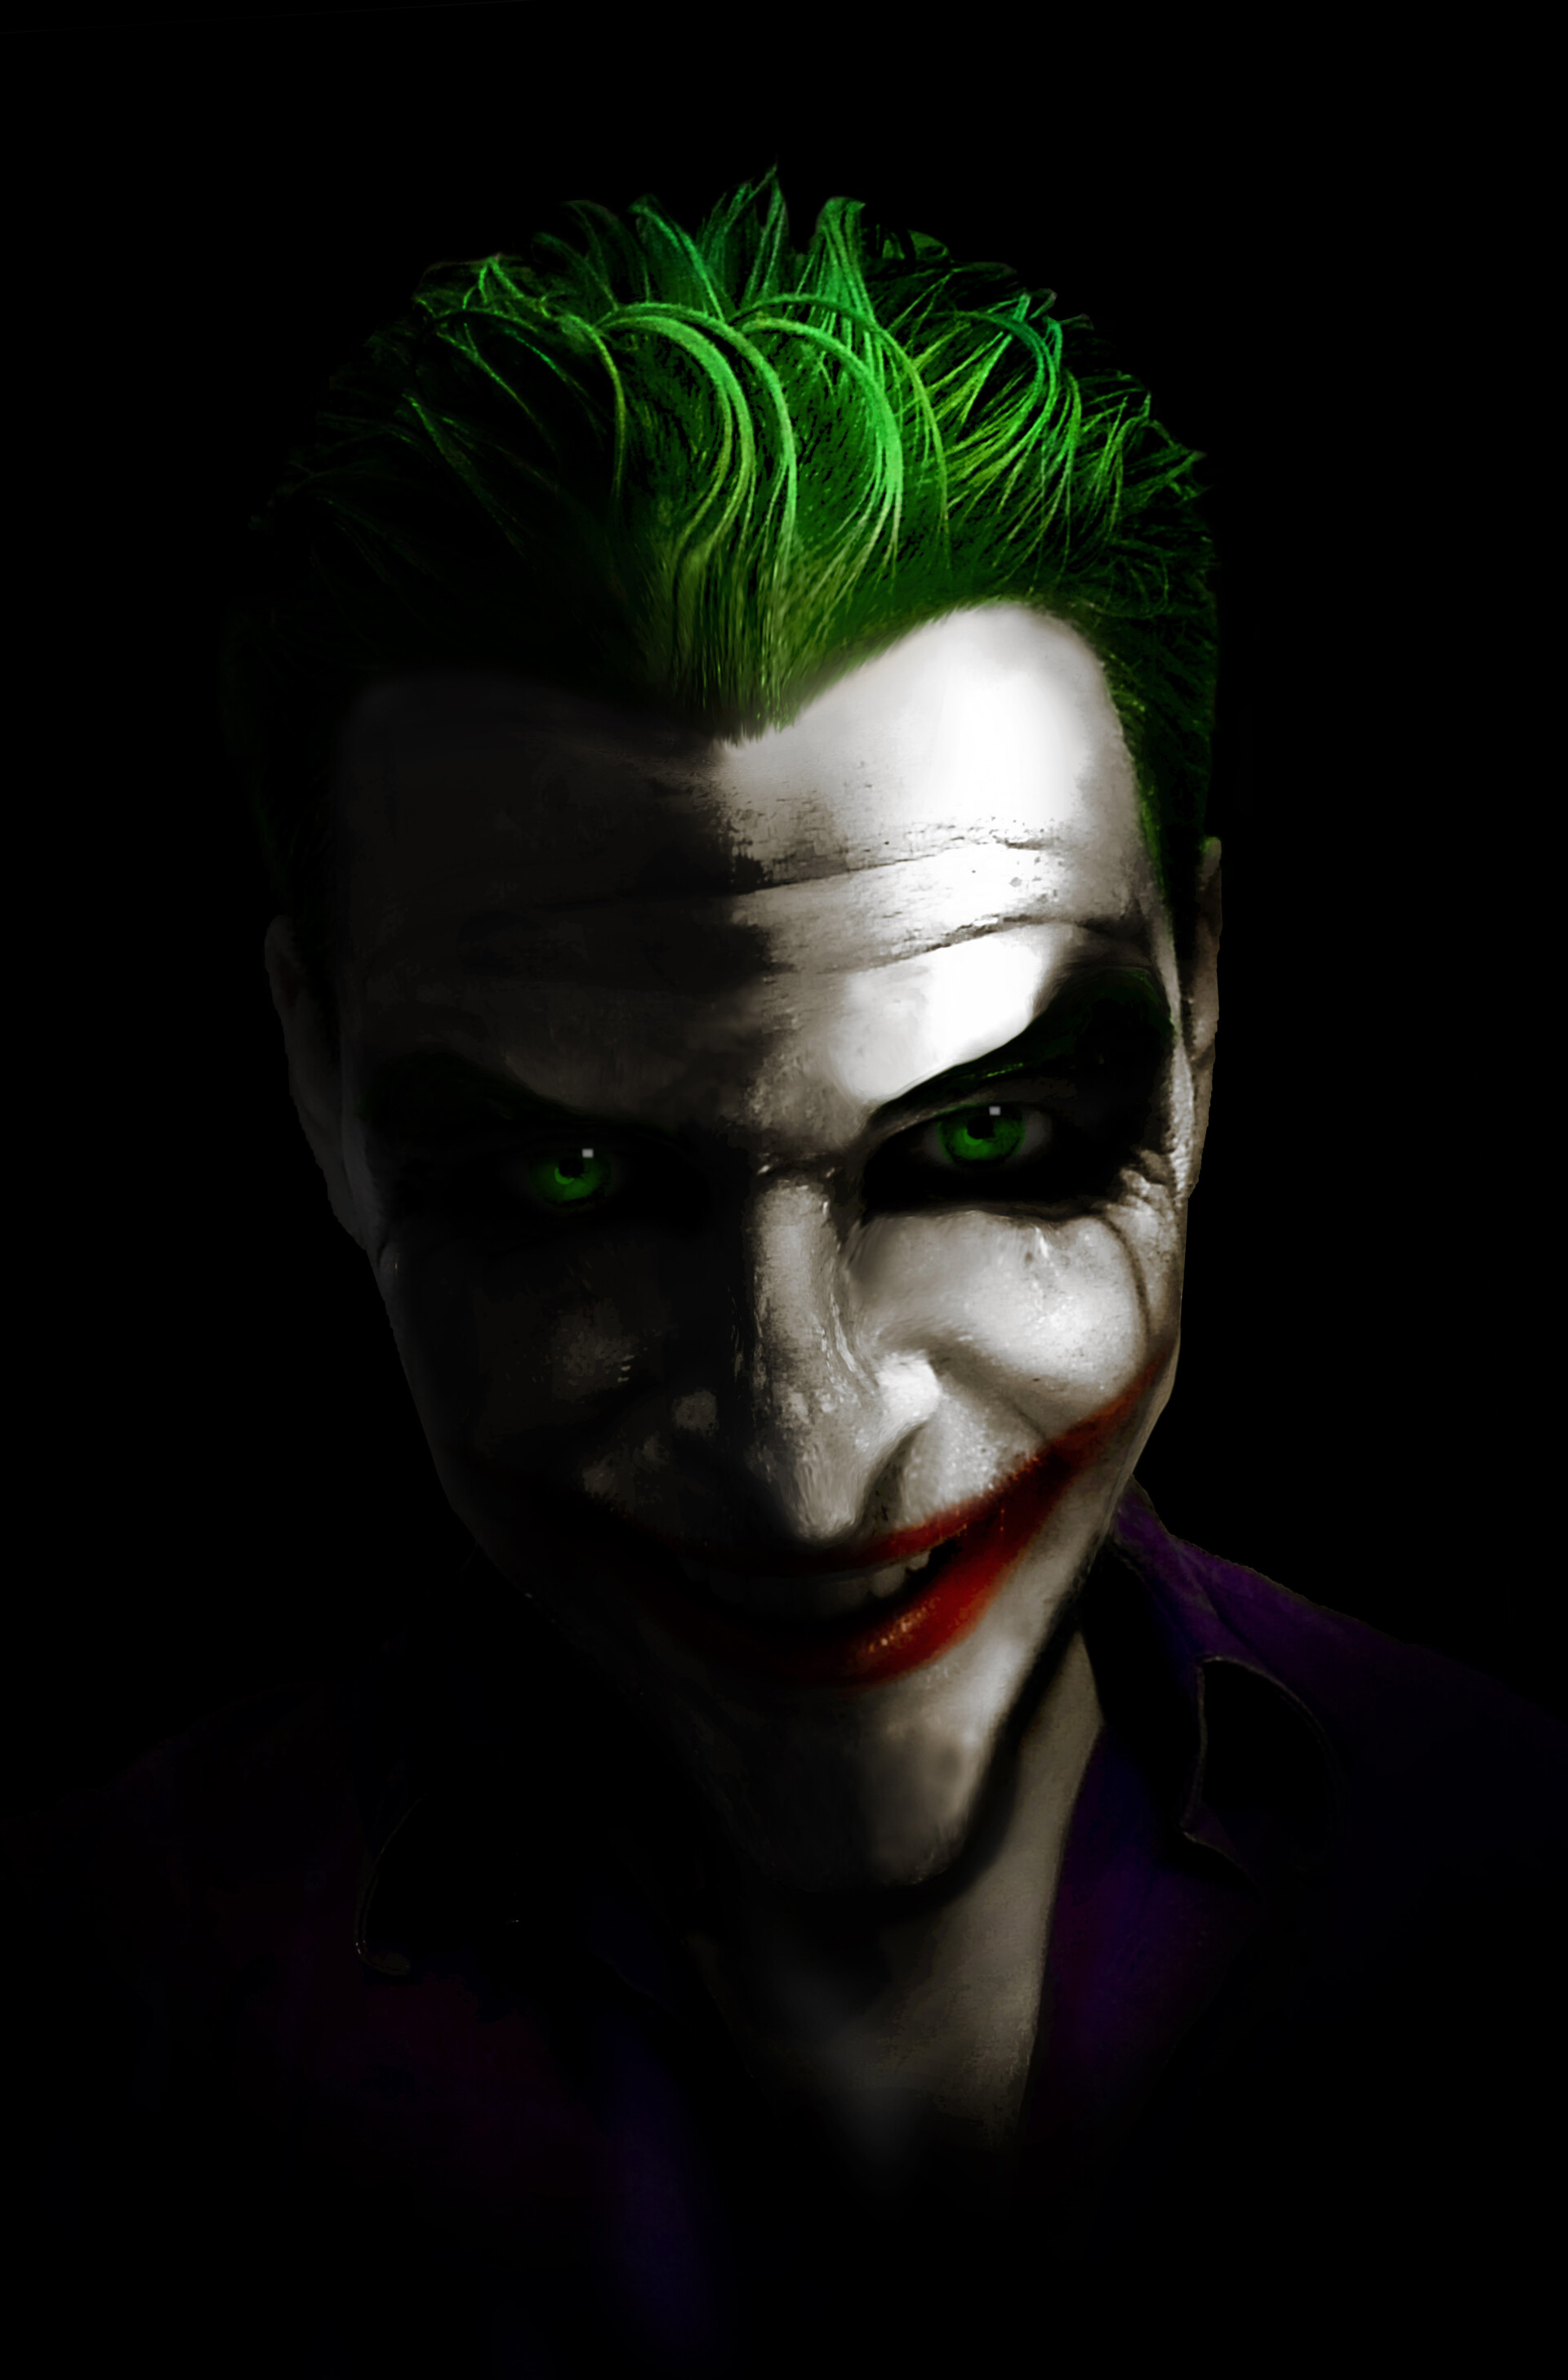 Jonathan Sparks Visage Art Productions - The Joker